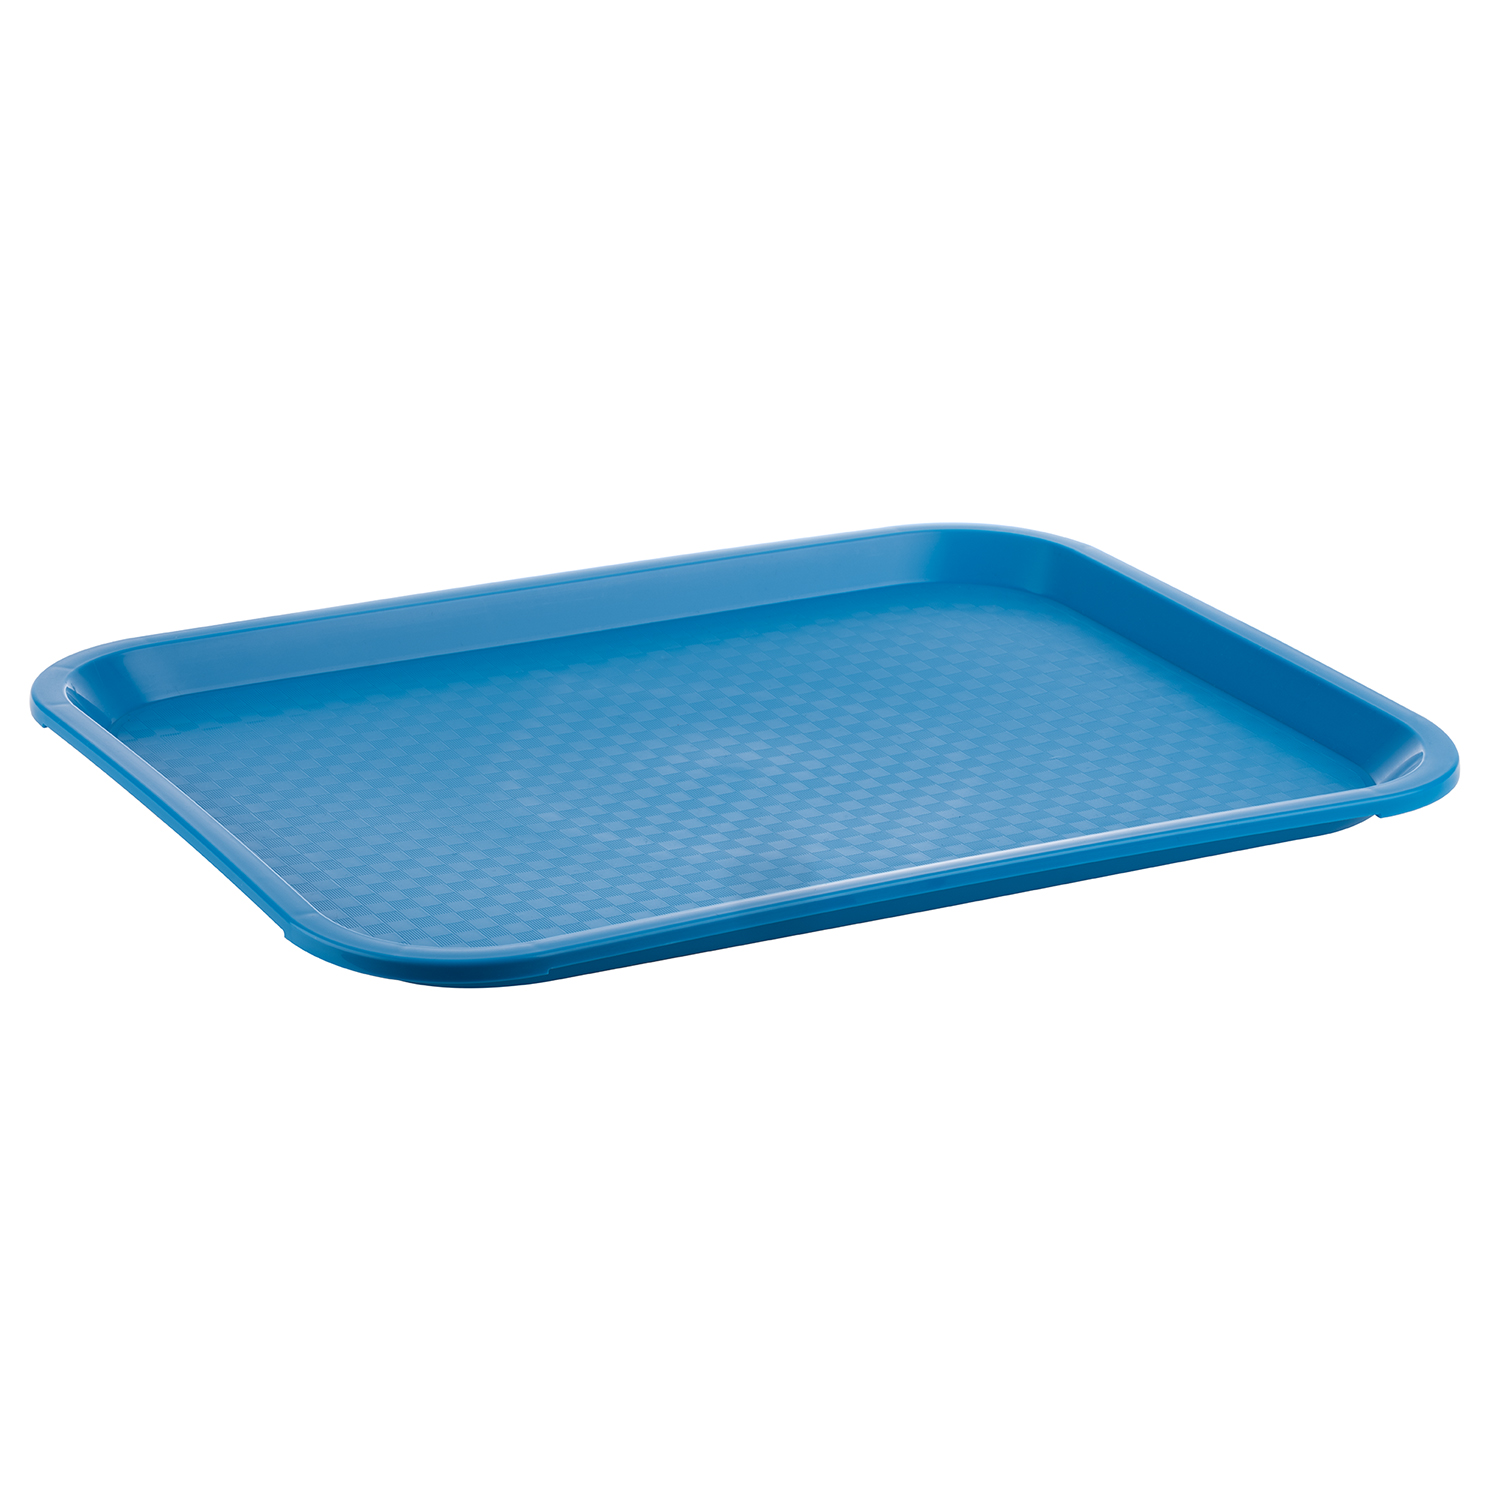 Fast Food-Tablett, blau, 35 x 27 cm, H: 2 cm                       